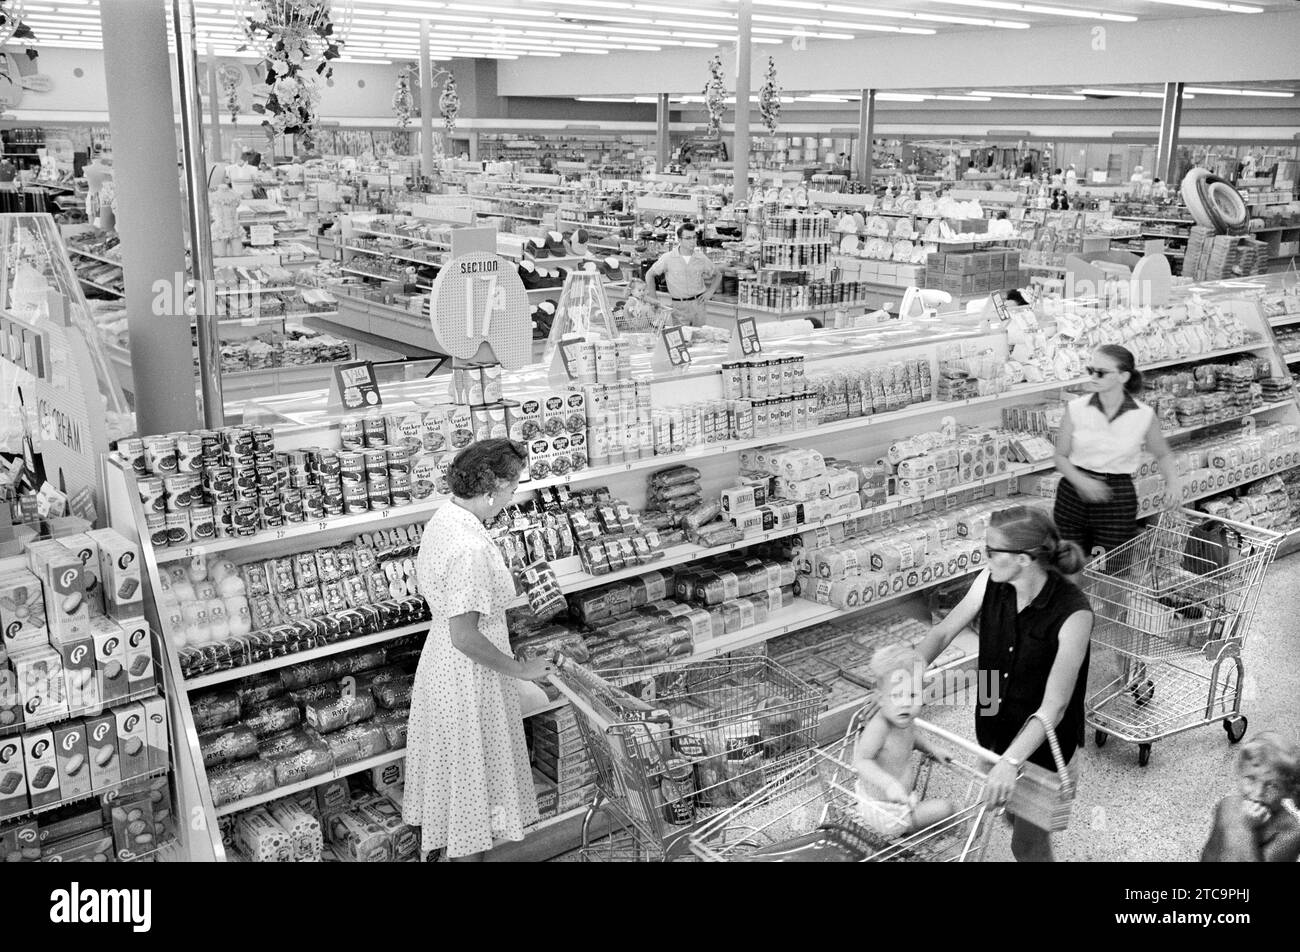 Women with shopping carts in supermarket, Washington, D.C., USA, Thomas J. O'Halloran, U.S. News & World Report Magazine Photograph Collection, June 1958 Stock Photo